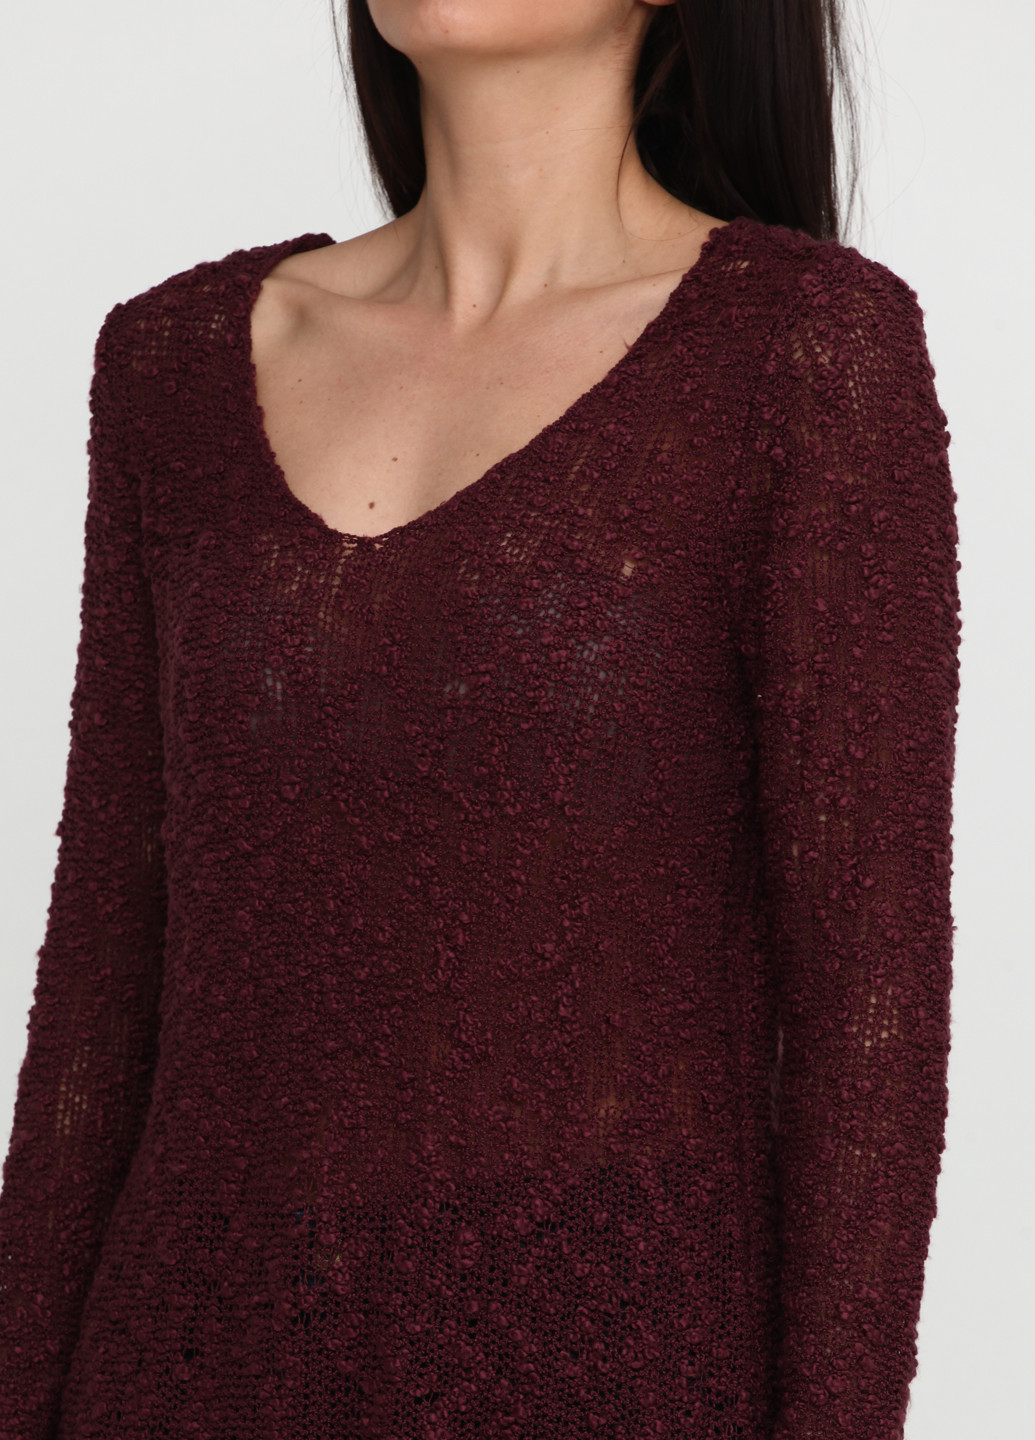 Бордовый демисезонный пуловер пуловер Chillytime